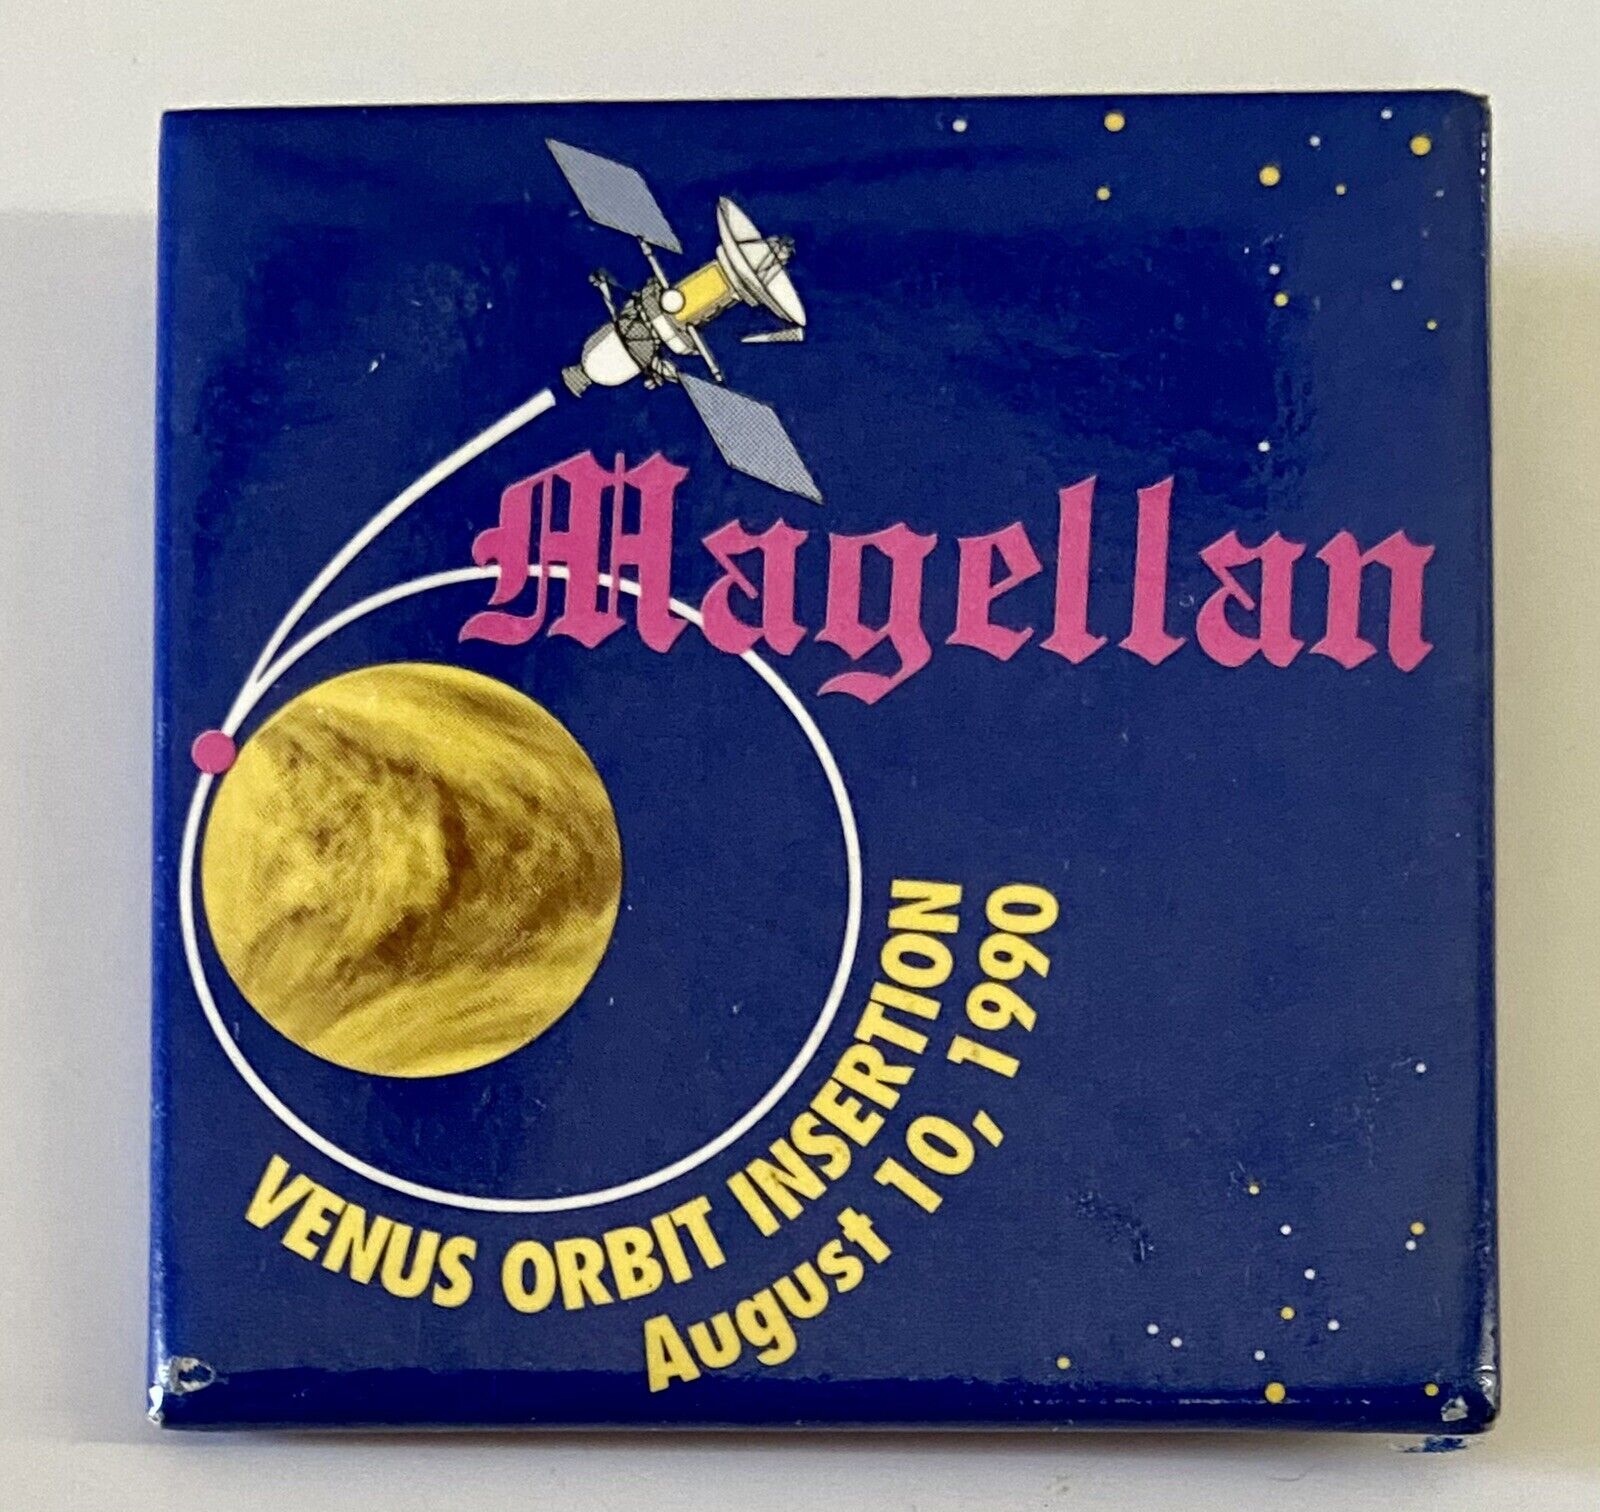 Vintage 1990 Magellan Venus Orbit Insertion Nasa Space Exploration Button Pin